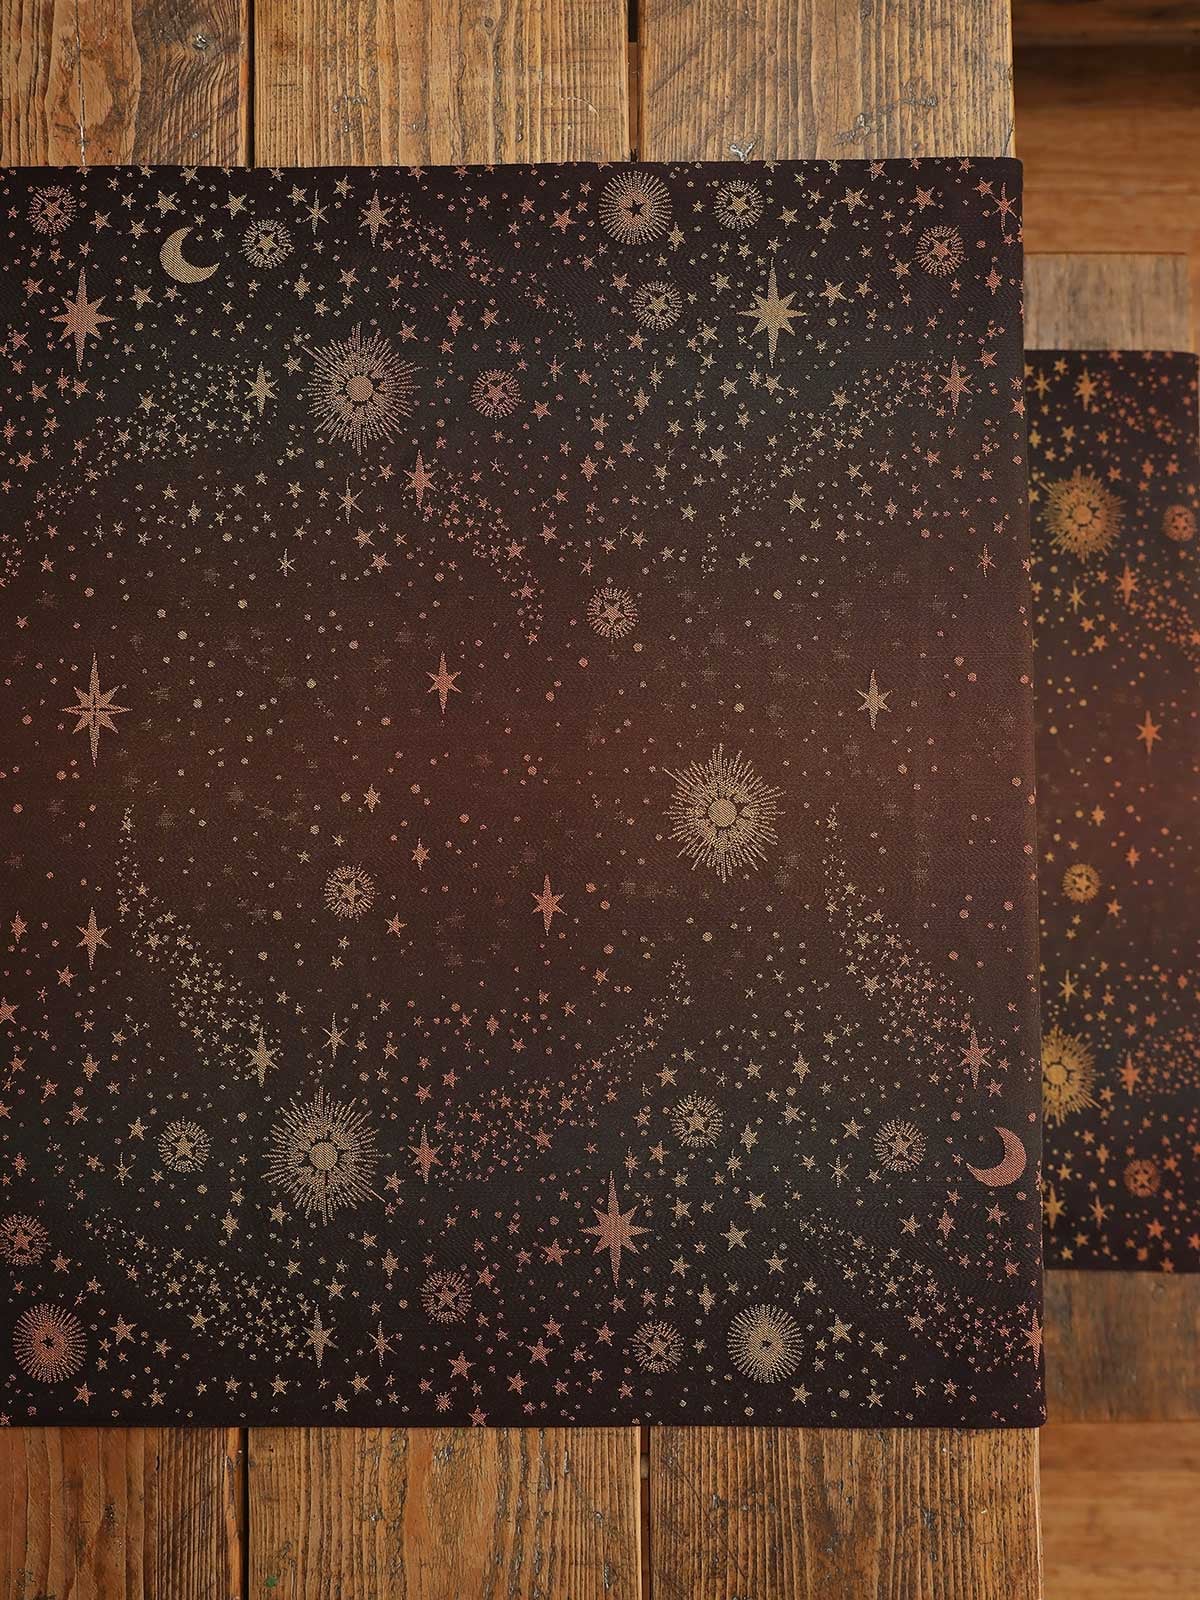 Oscha Constellation Interstellar Dust   Image